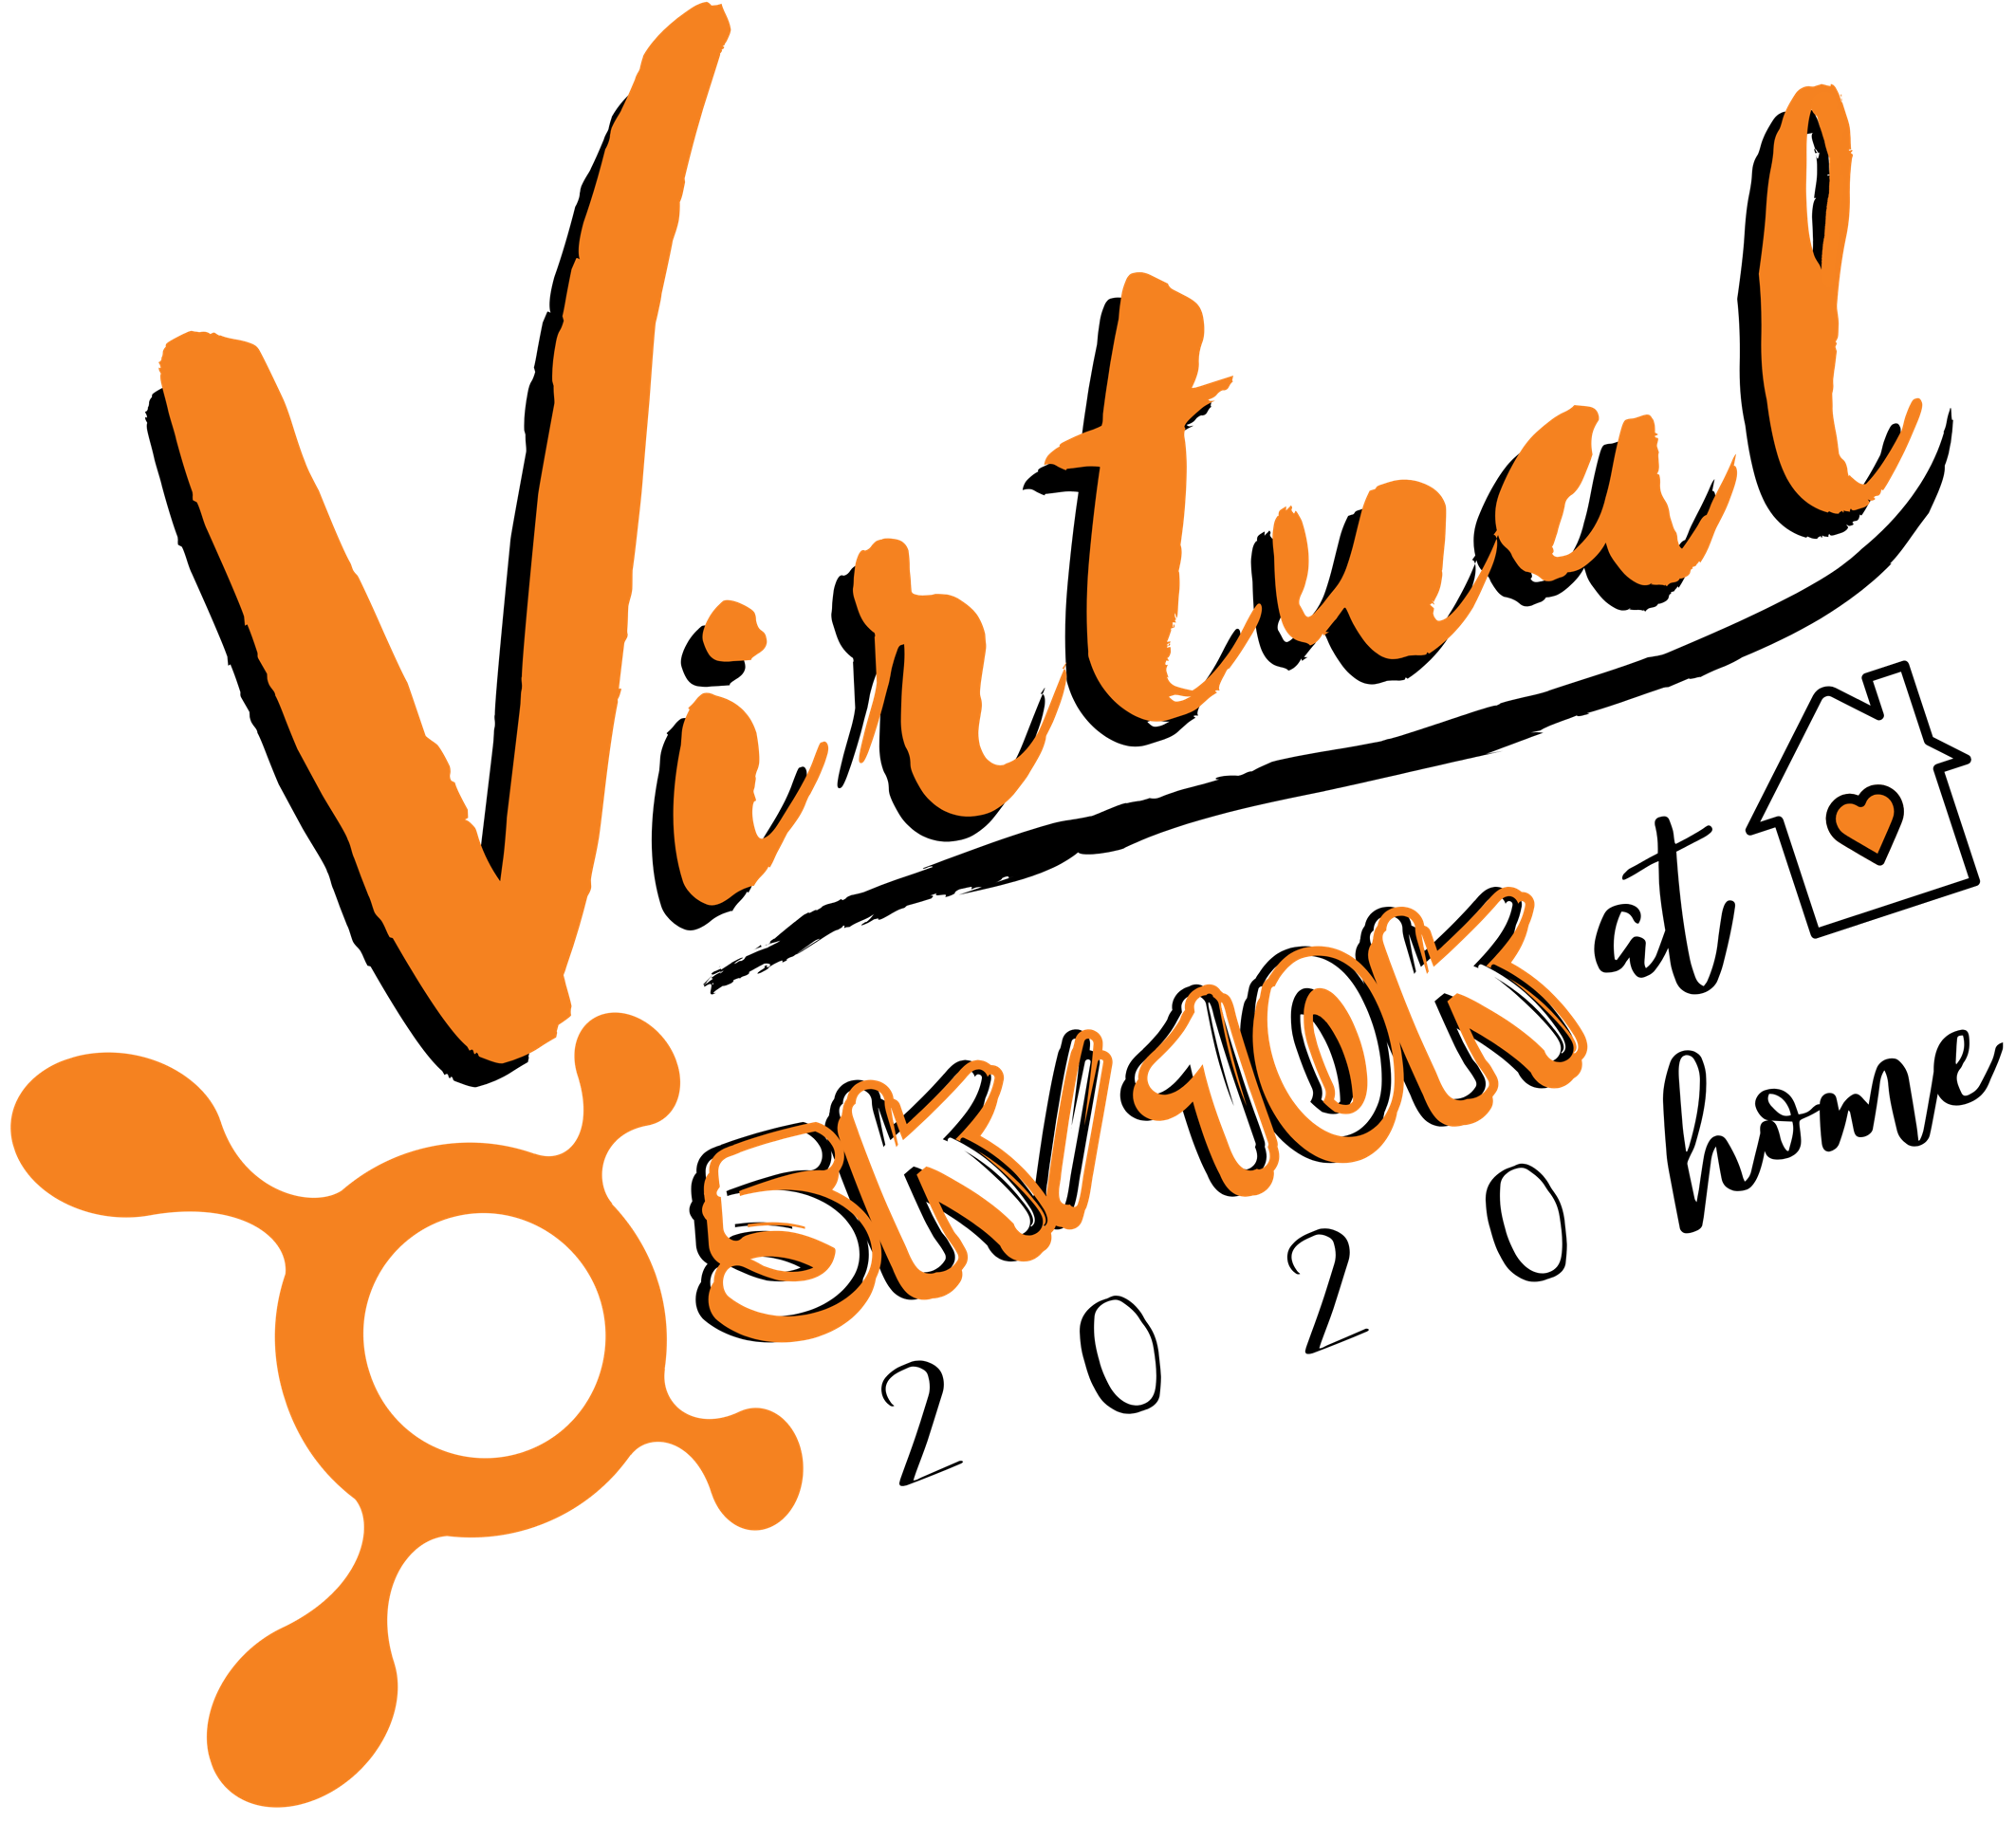 Orangetheory Fitness 5k 10k Virtual Race